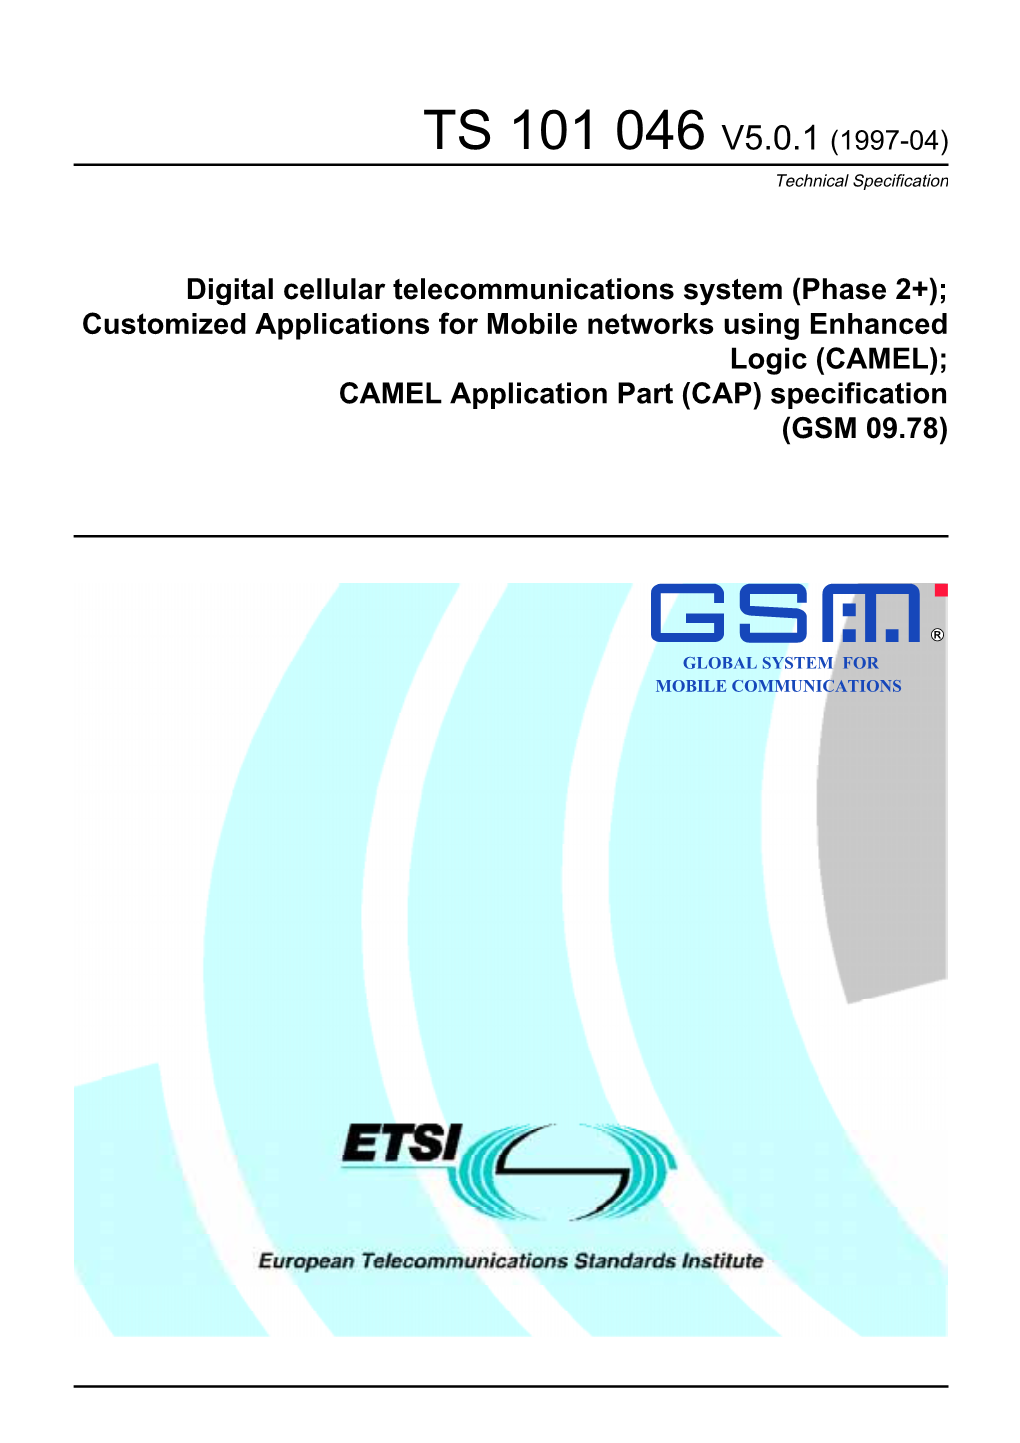 CAMEL Application Part (CAP) Specification (GSM 09.78)